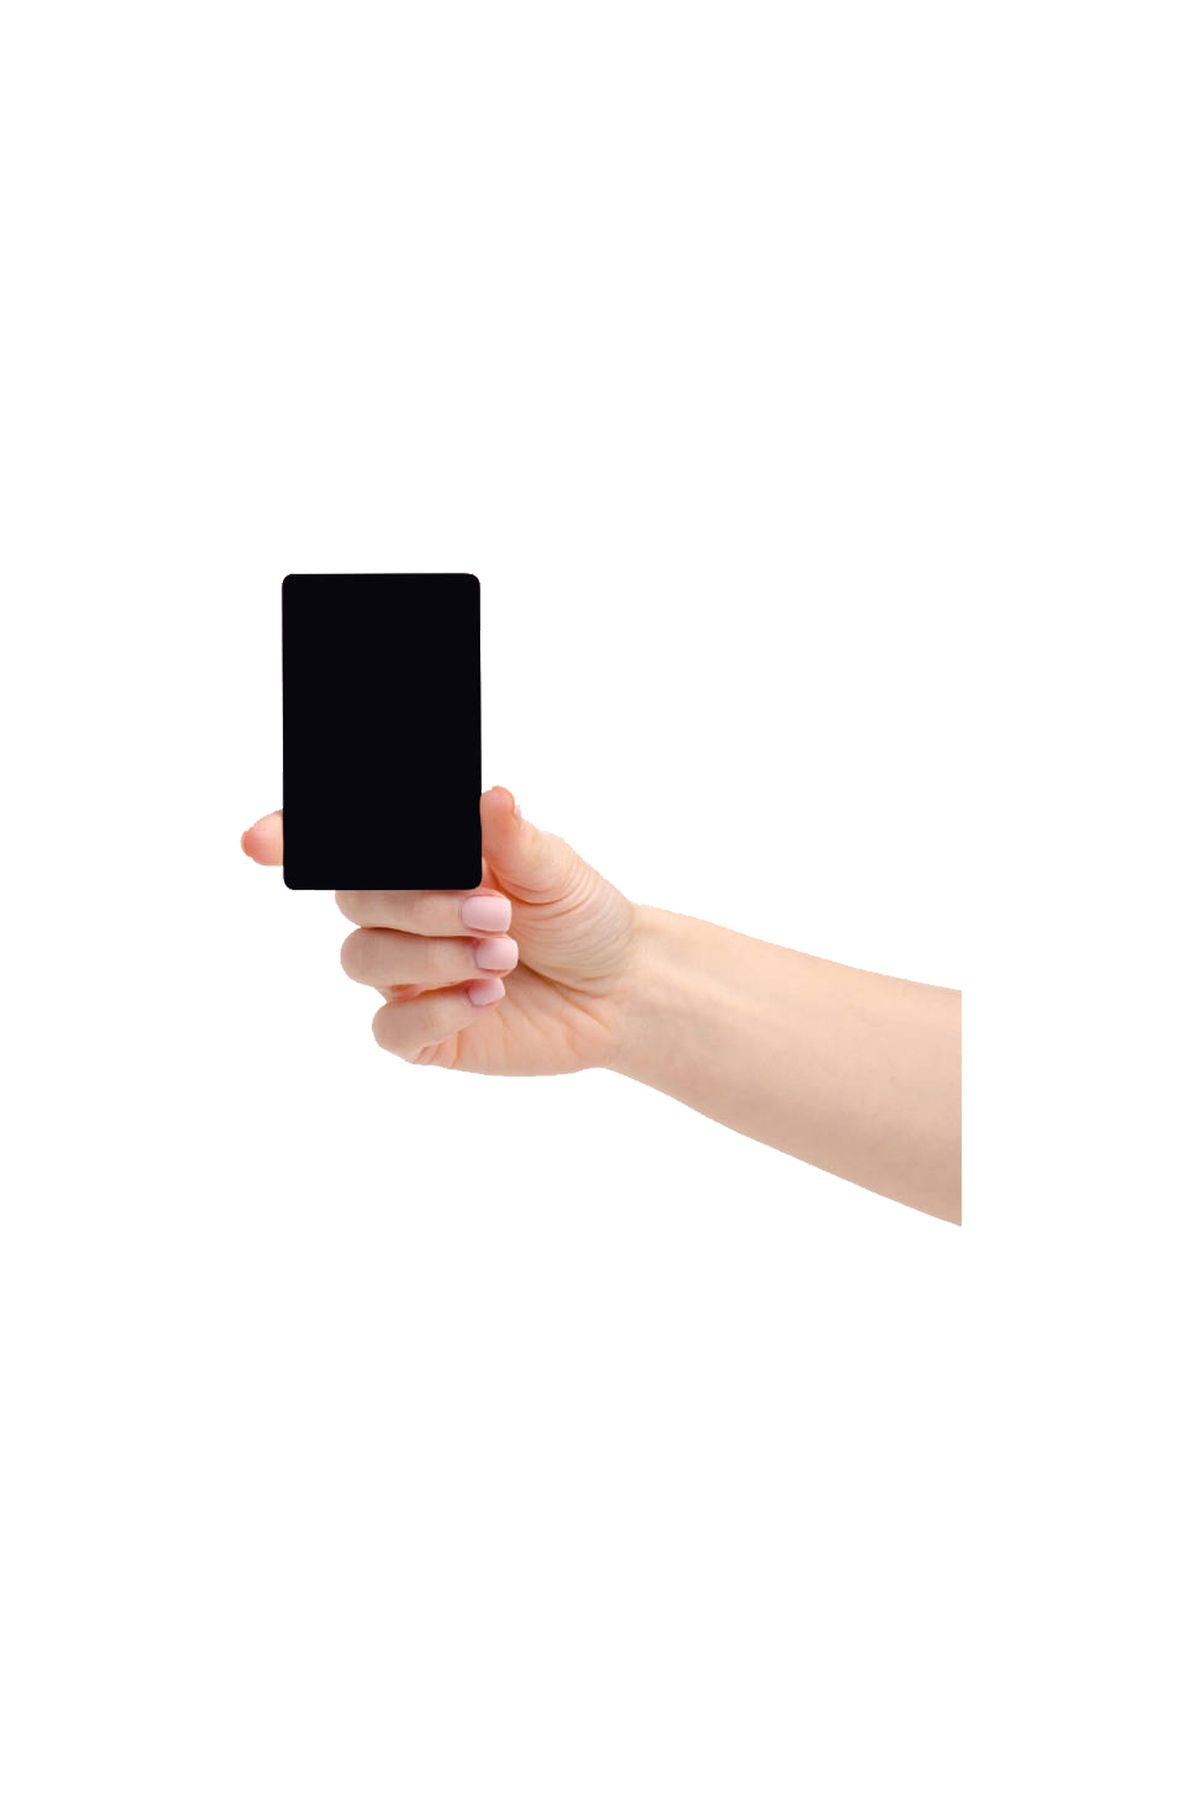 NFCpazar Akıllı Kart Ntag213 PVC Siyah Programlanabilir